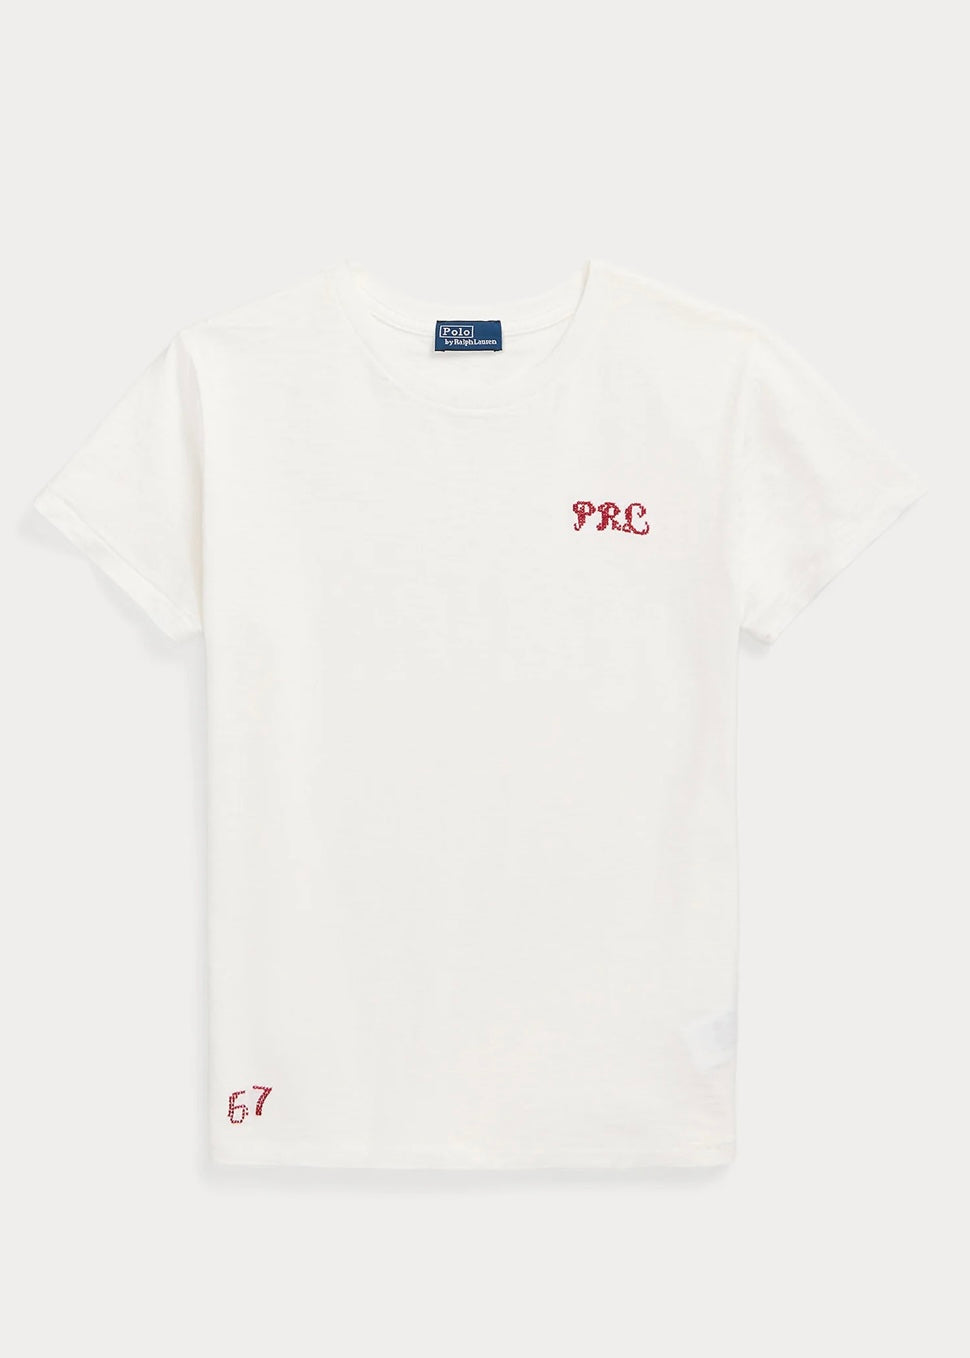 Polo Ralph Lauren PRL t-shirt - White